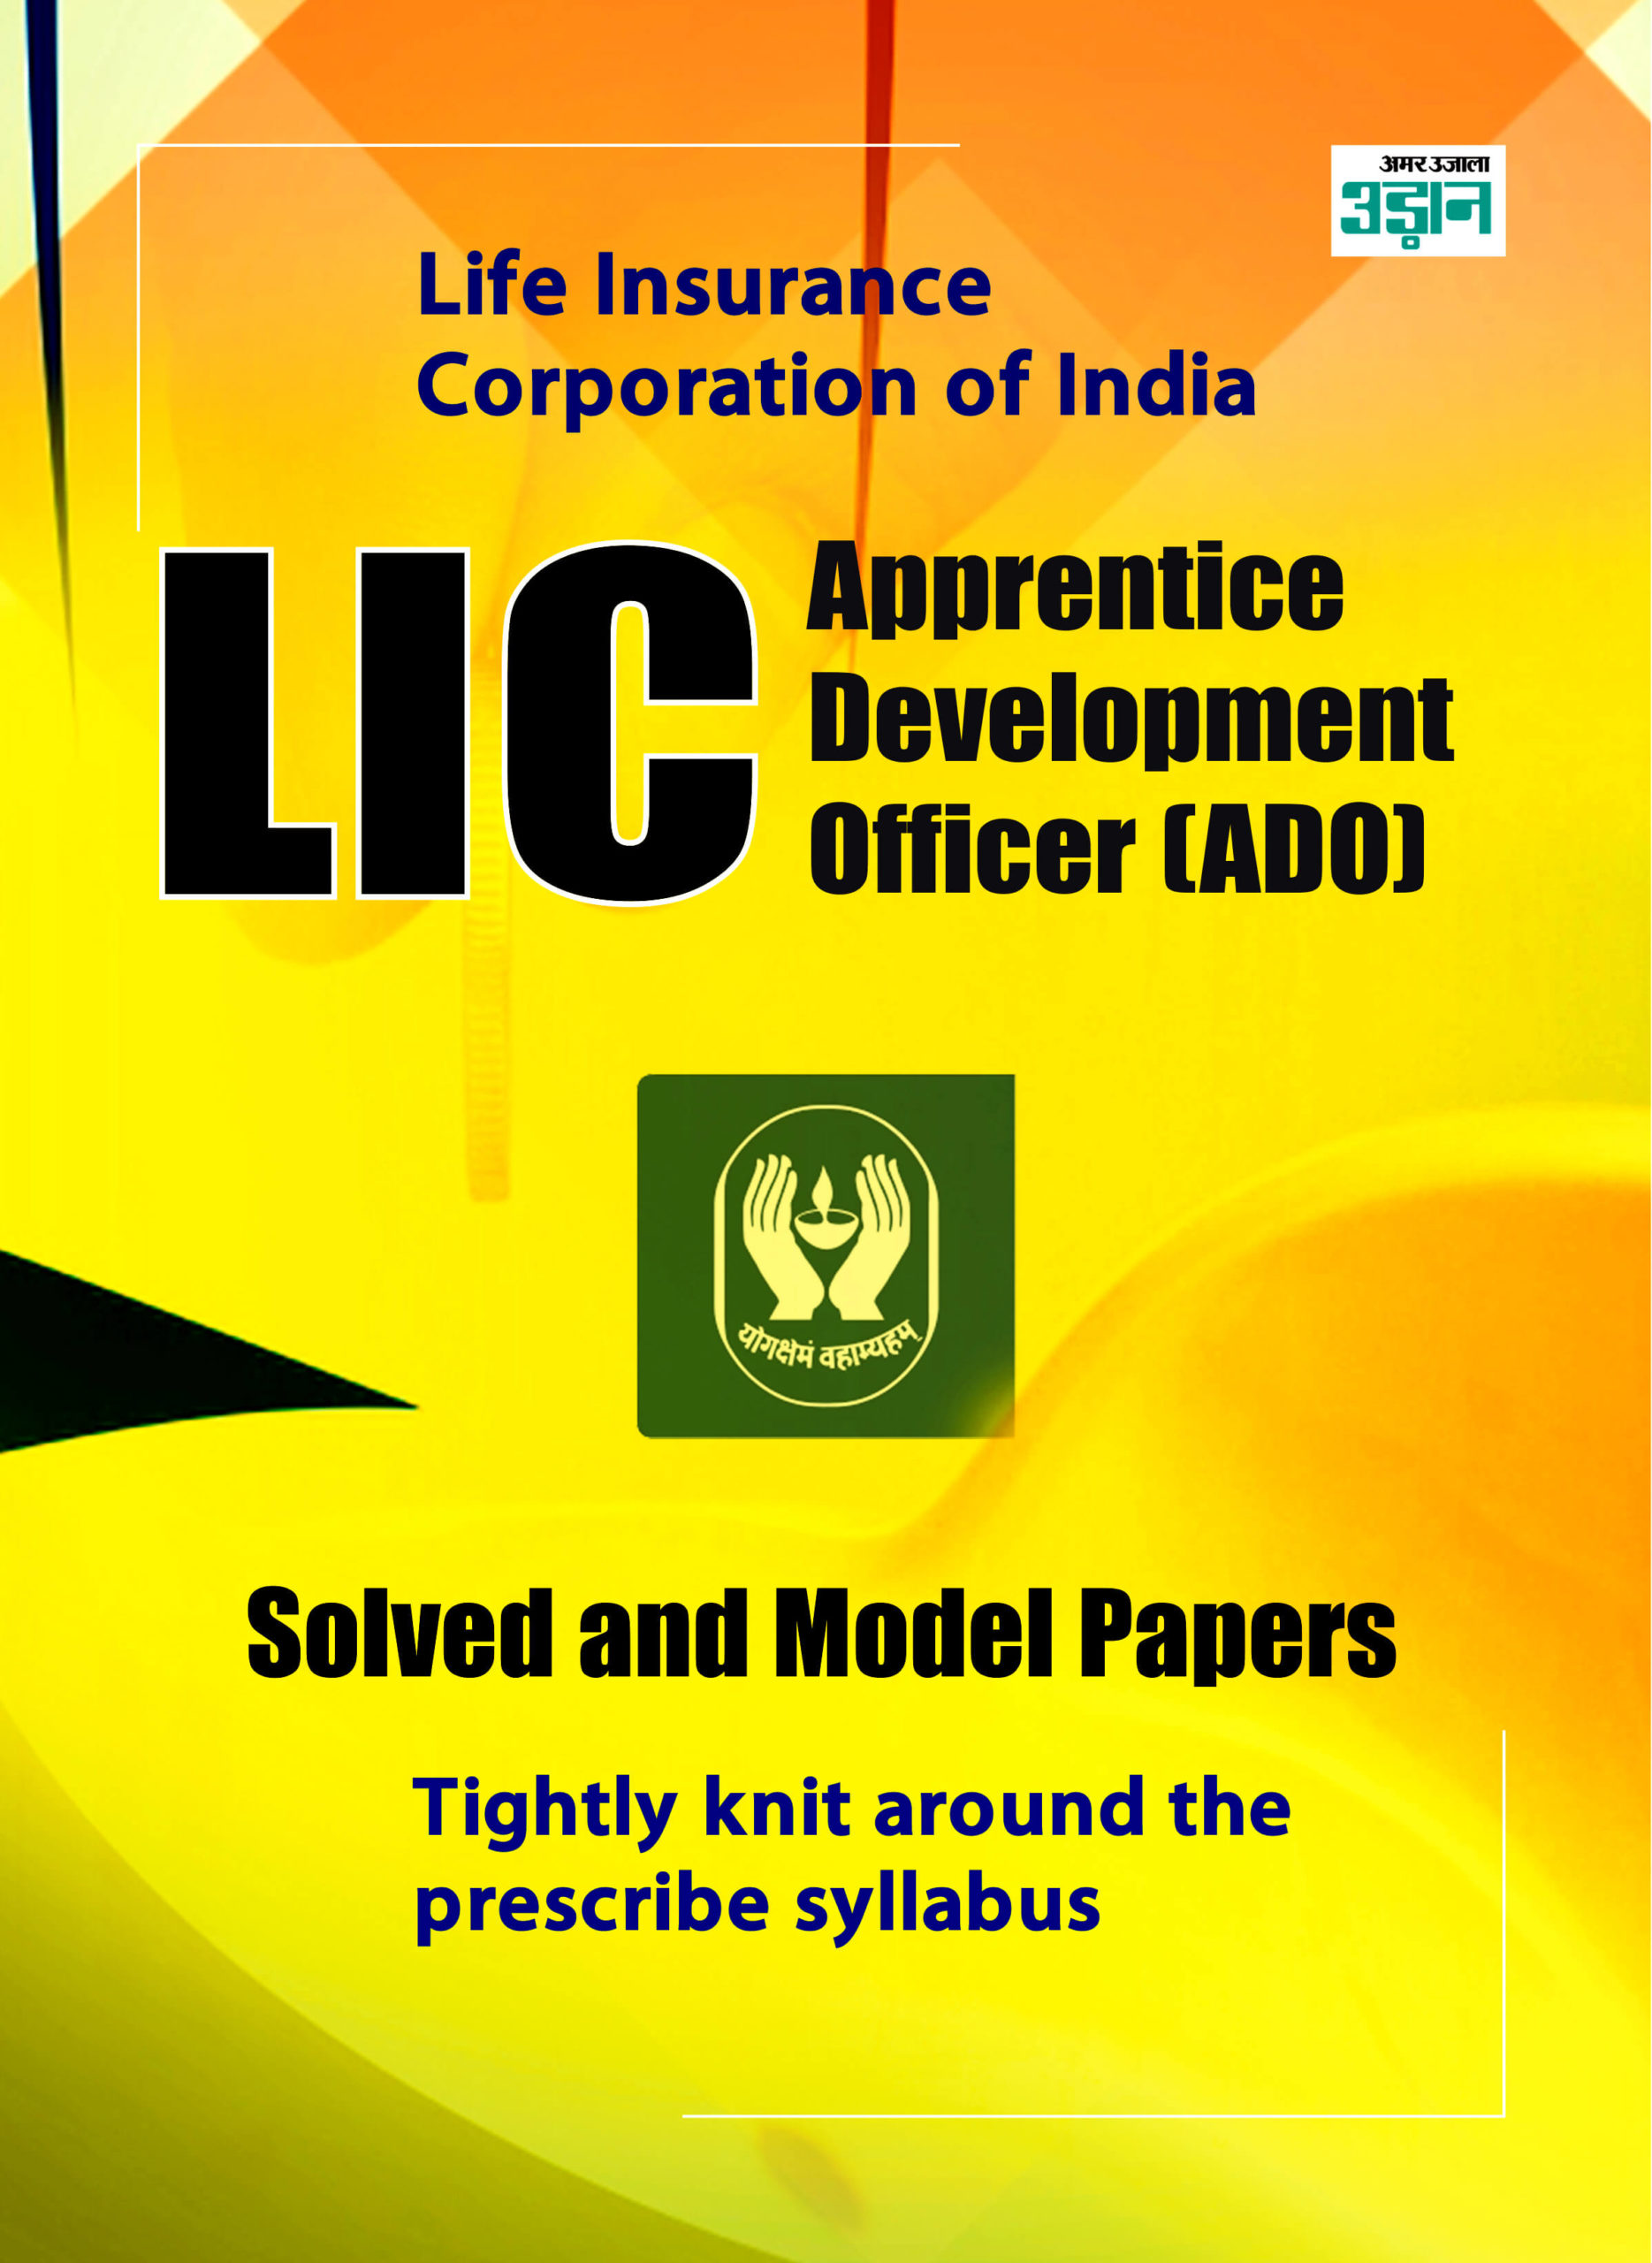 LIC ADO Model Solved Paper (English)